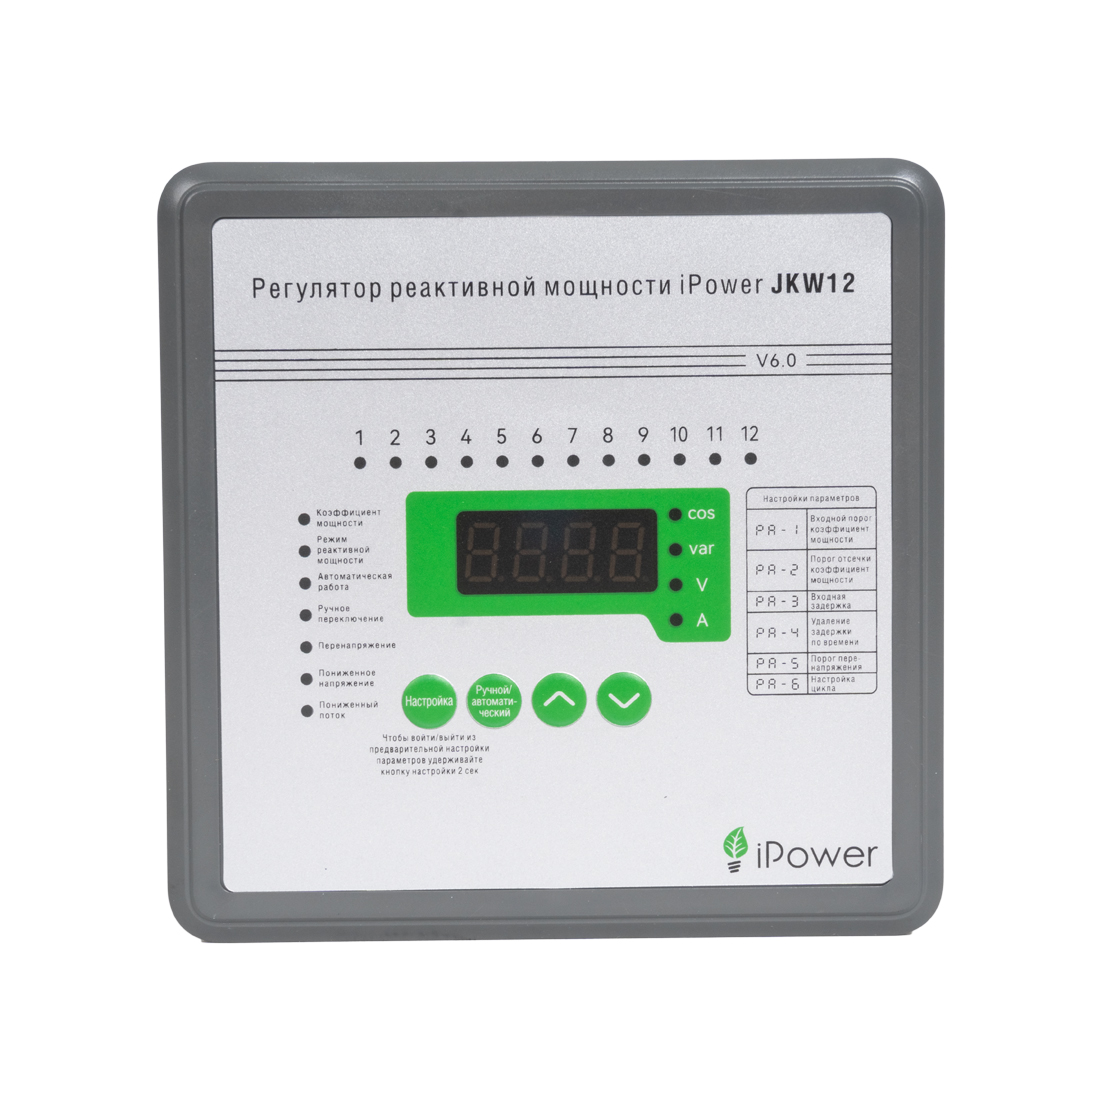 Регулятор реактивной мощности iPower JKW12 с 12-тью контурами